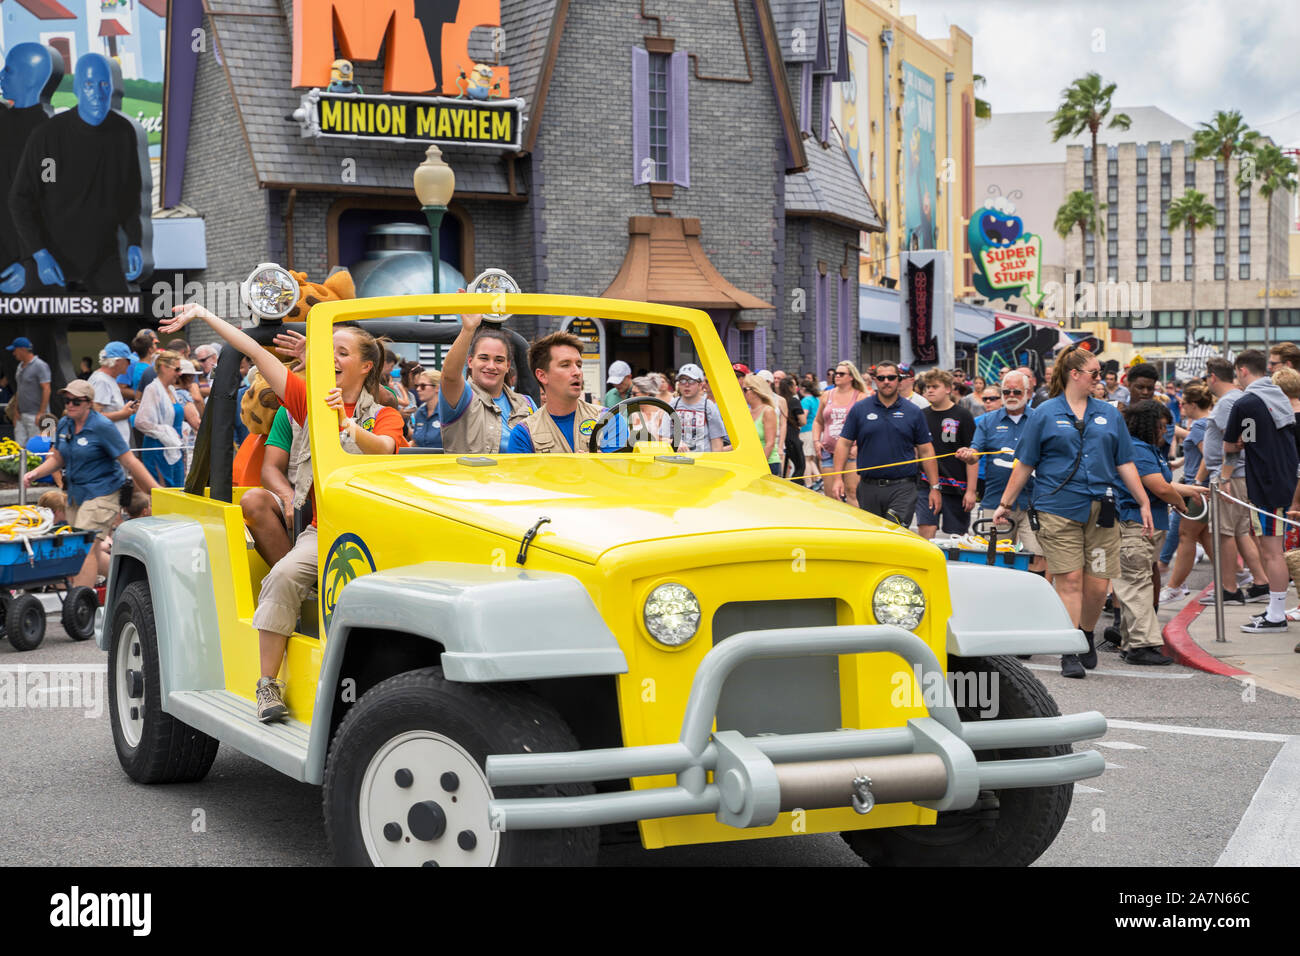 Minion Mayhem, Despicable ME, characters appearance, Parade, Universal Studios Resort, Orlando, Florida, USA Stock Photo